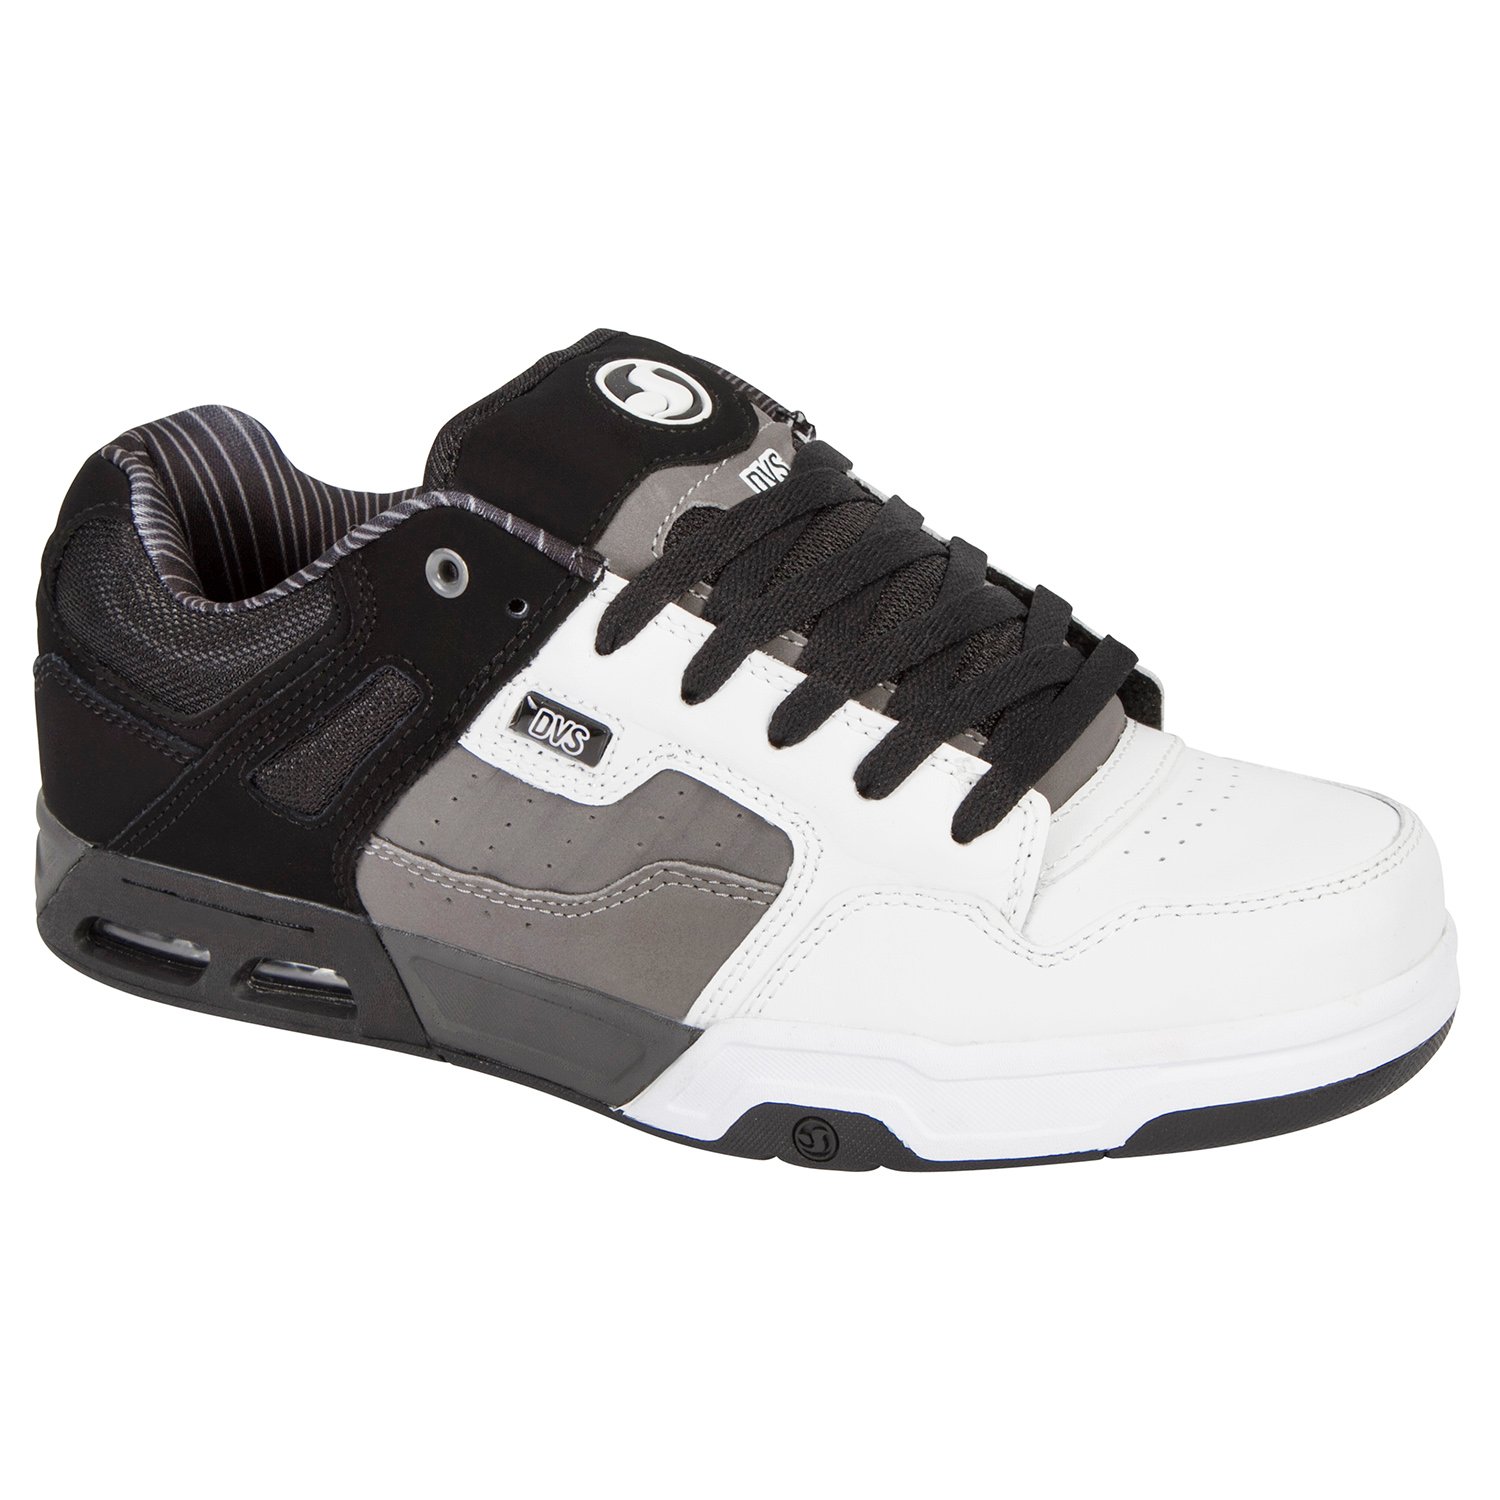 DVS Chaussures Enduro Heir Black/Charcoal/White/Leather Nubuck